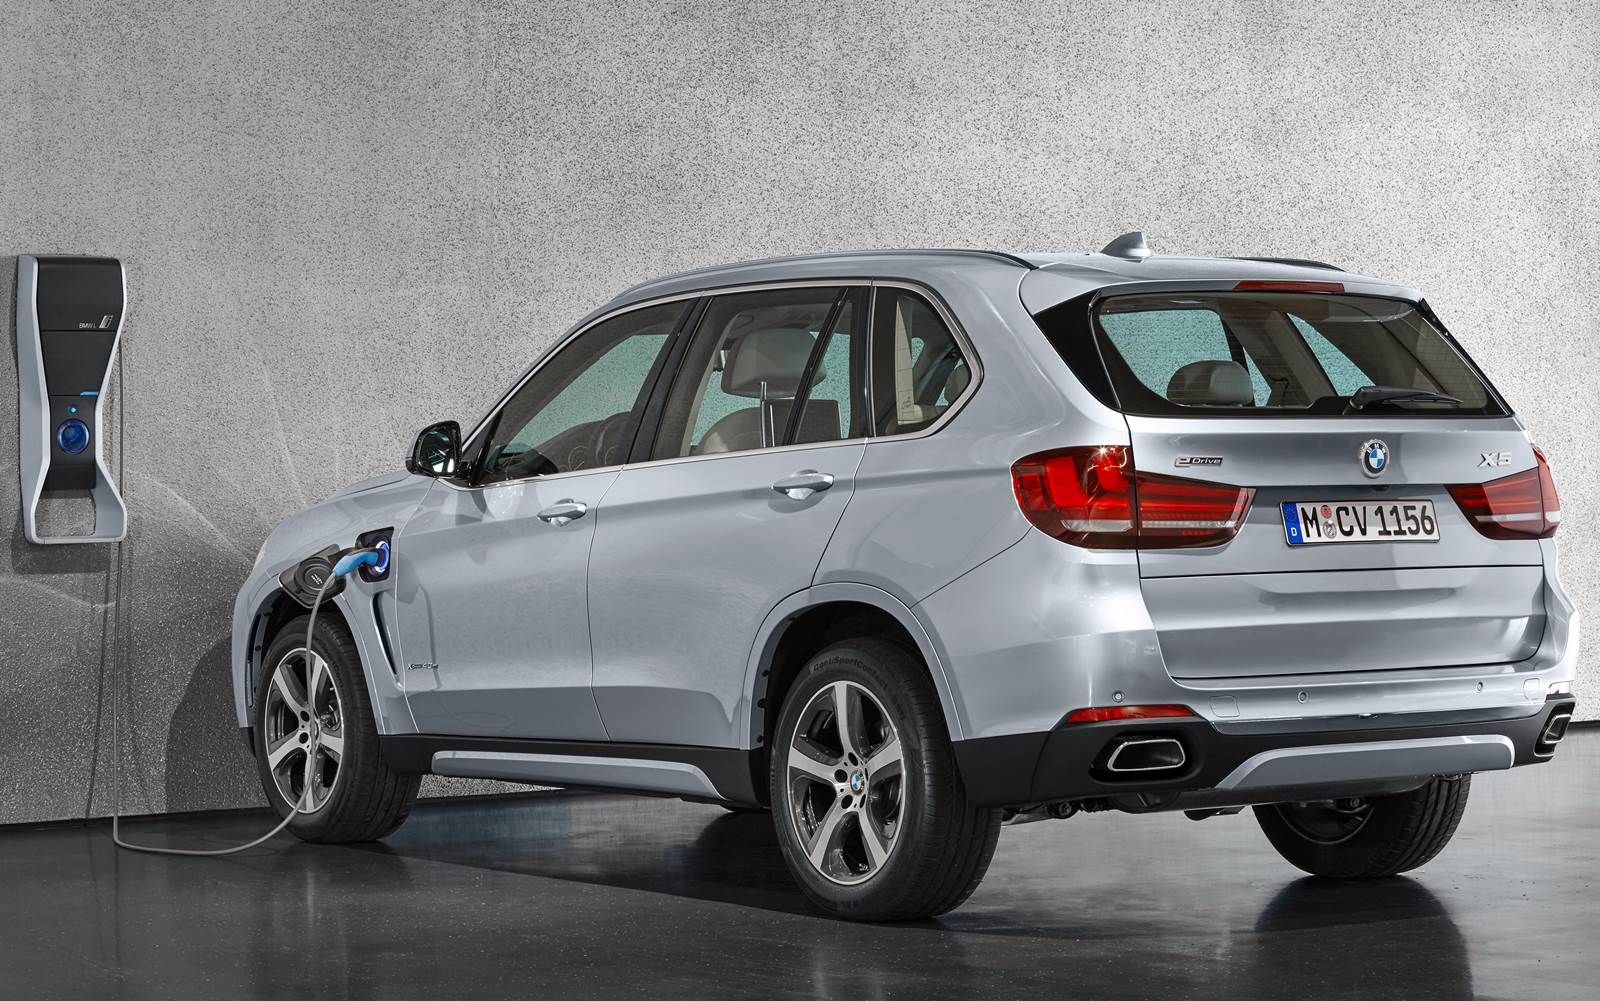 Novo BMW X5 2015 xDrive40e híbrido plug-in